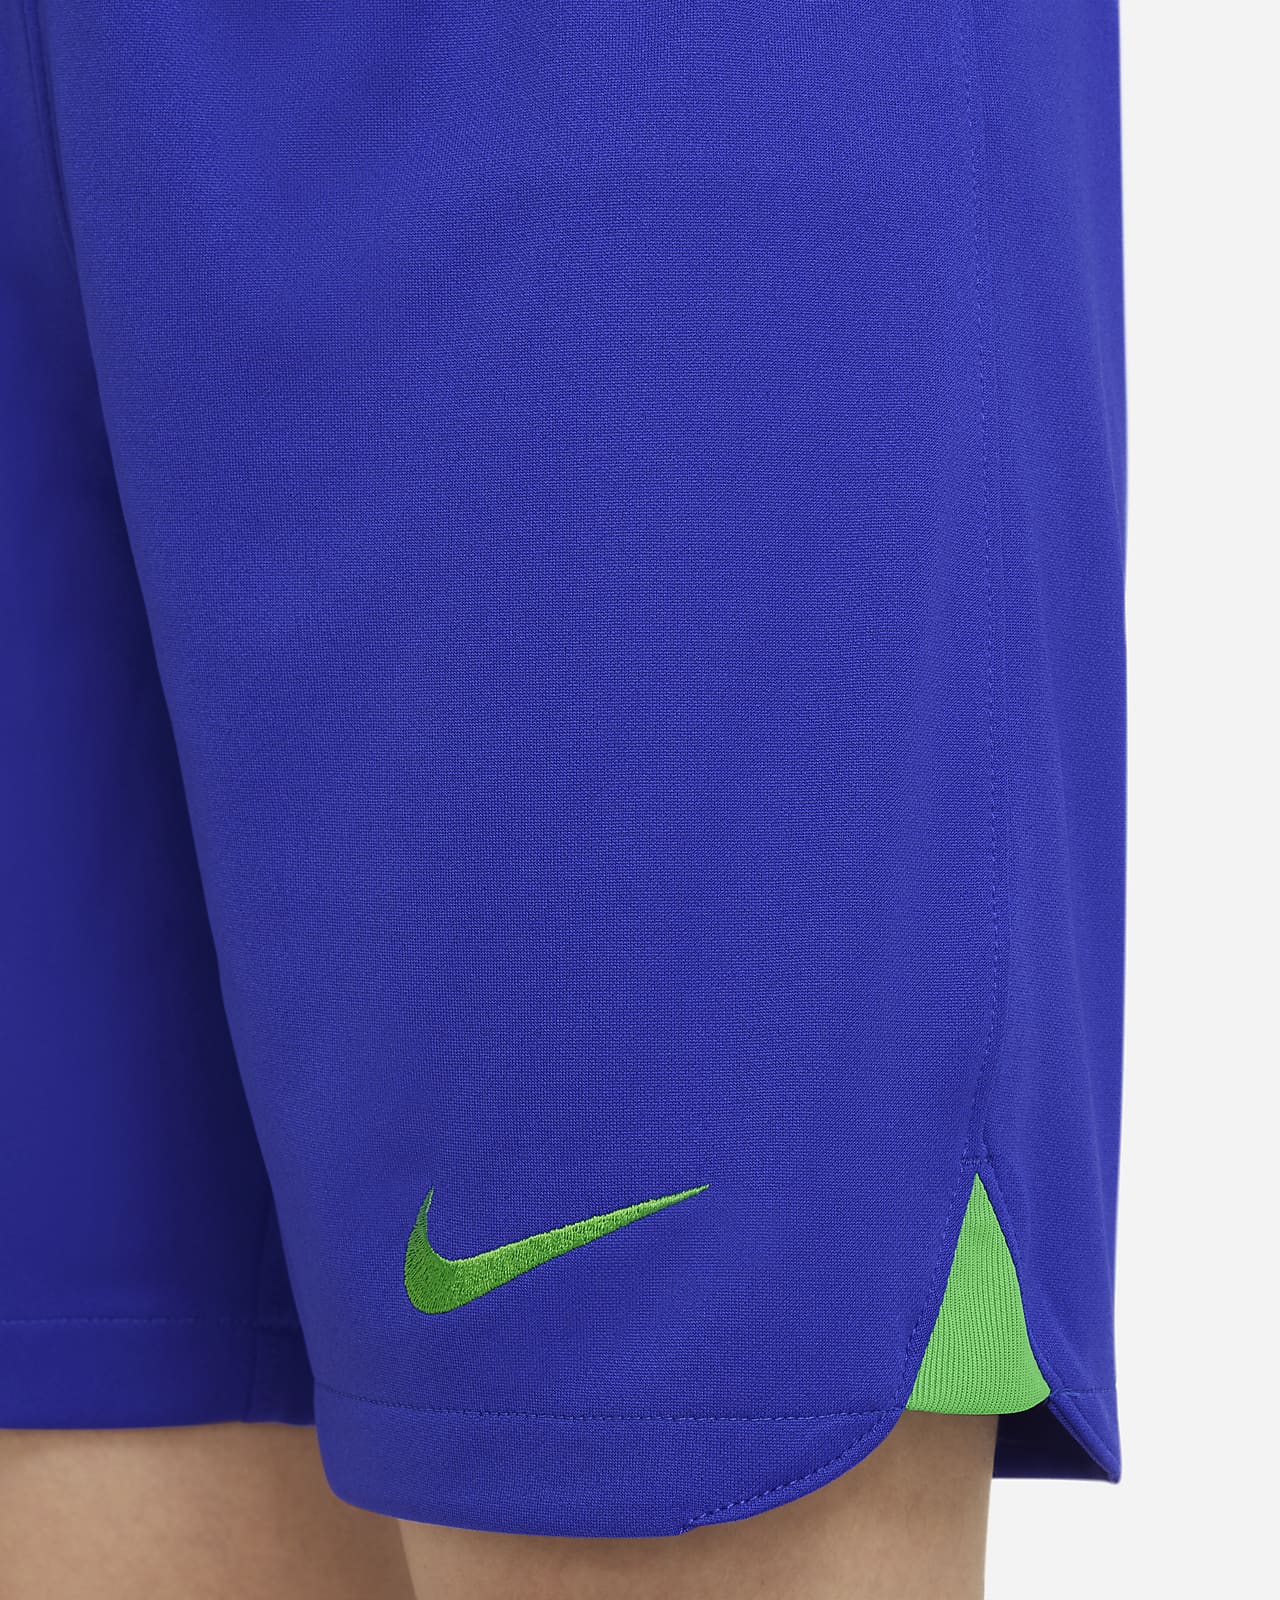 U.S. 2022/23 Stadium Home Men's Nike Dri-FIT Soccer Shorts.